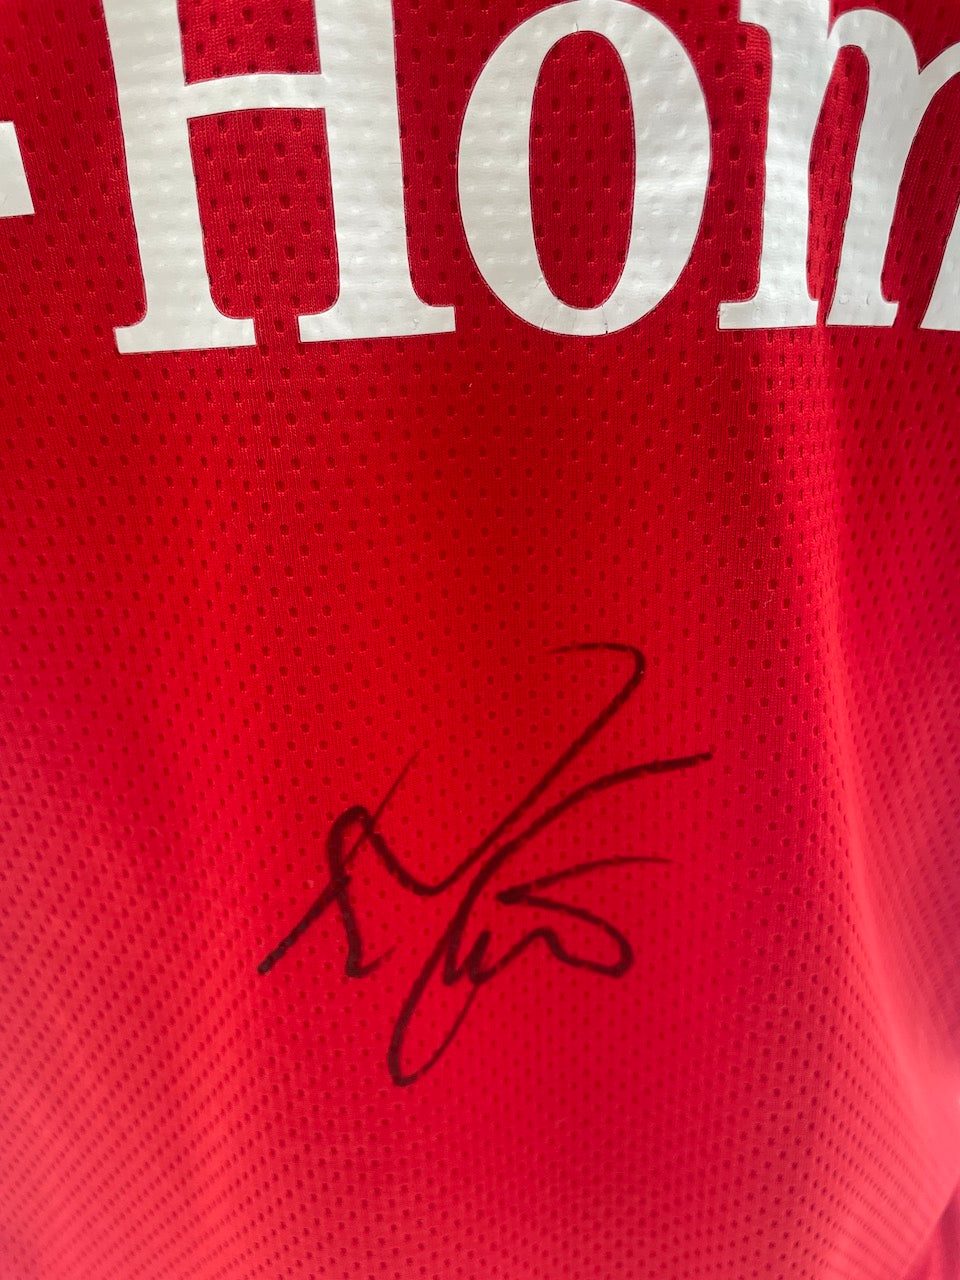 Bayern München Trikot Robert Kovac signiert Autogramme Bundesliga Adidas FCB M